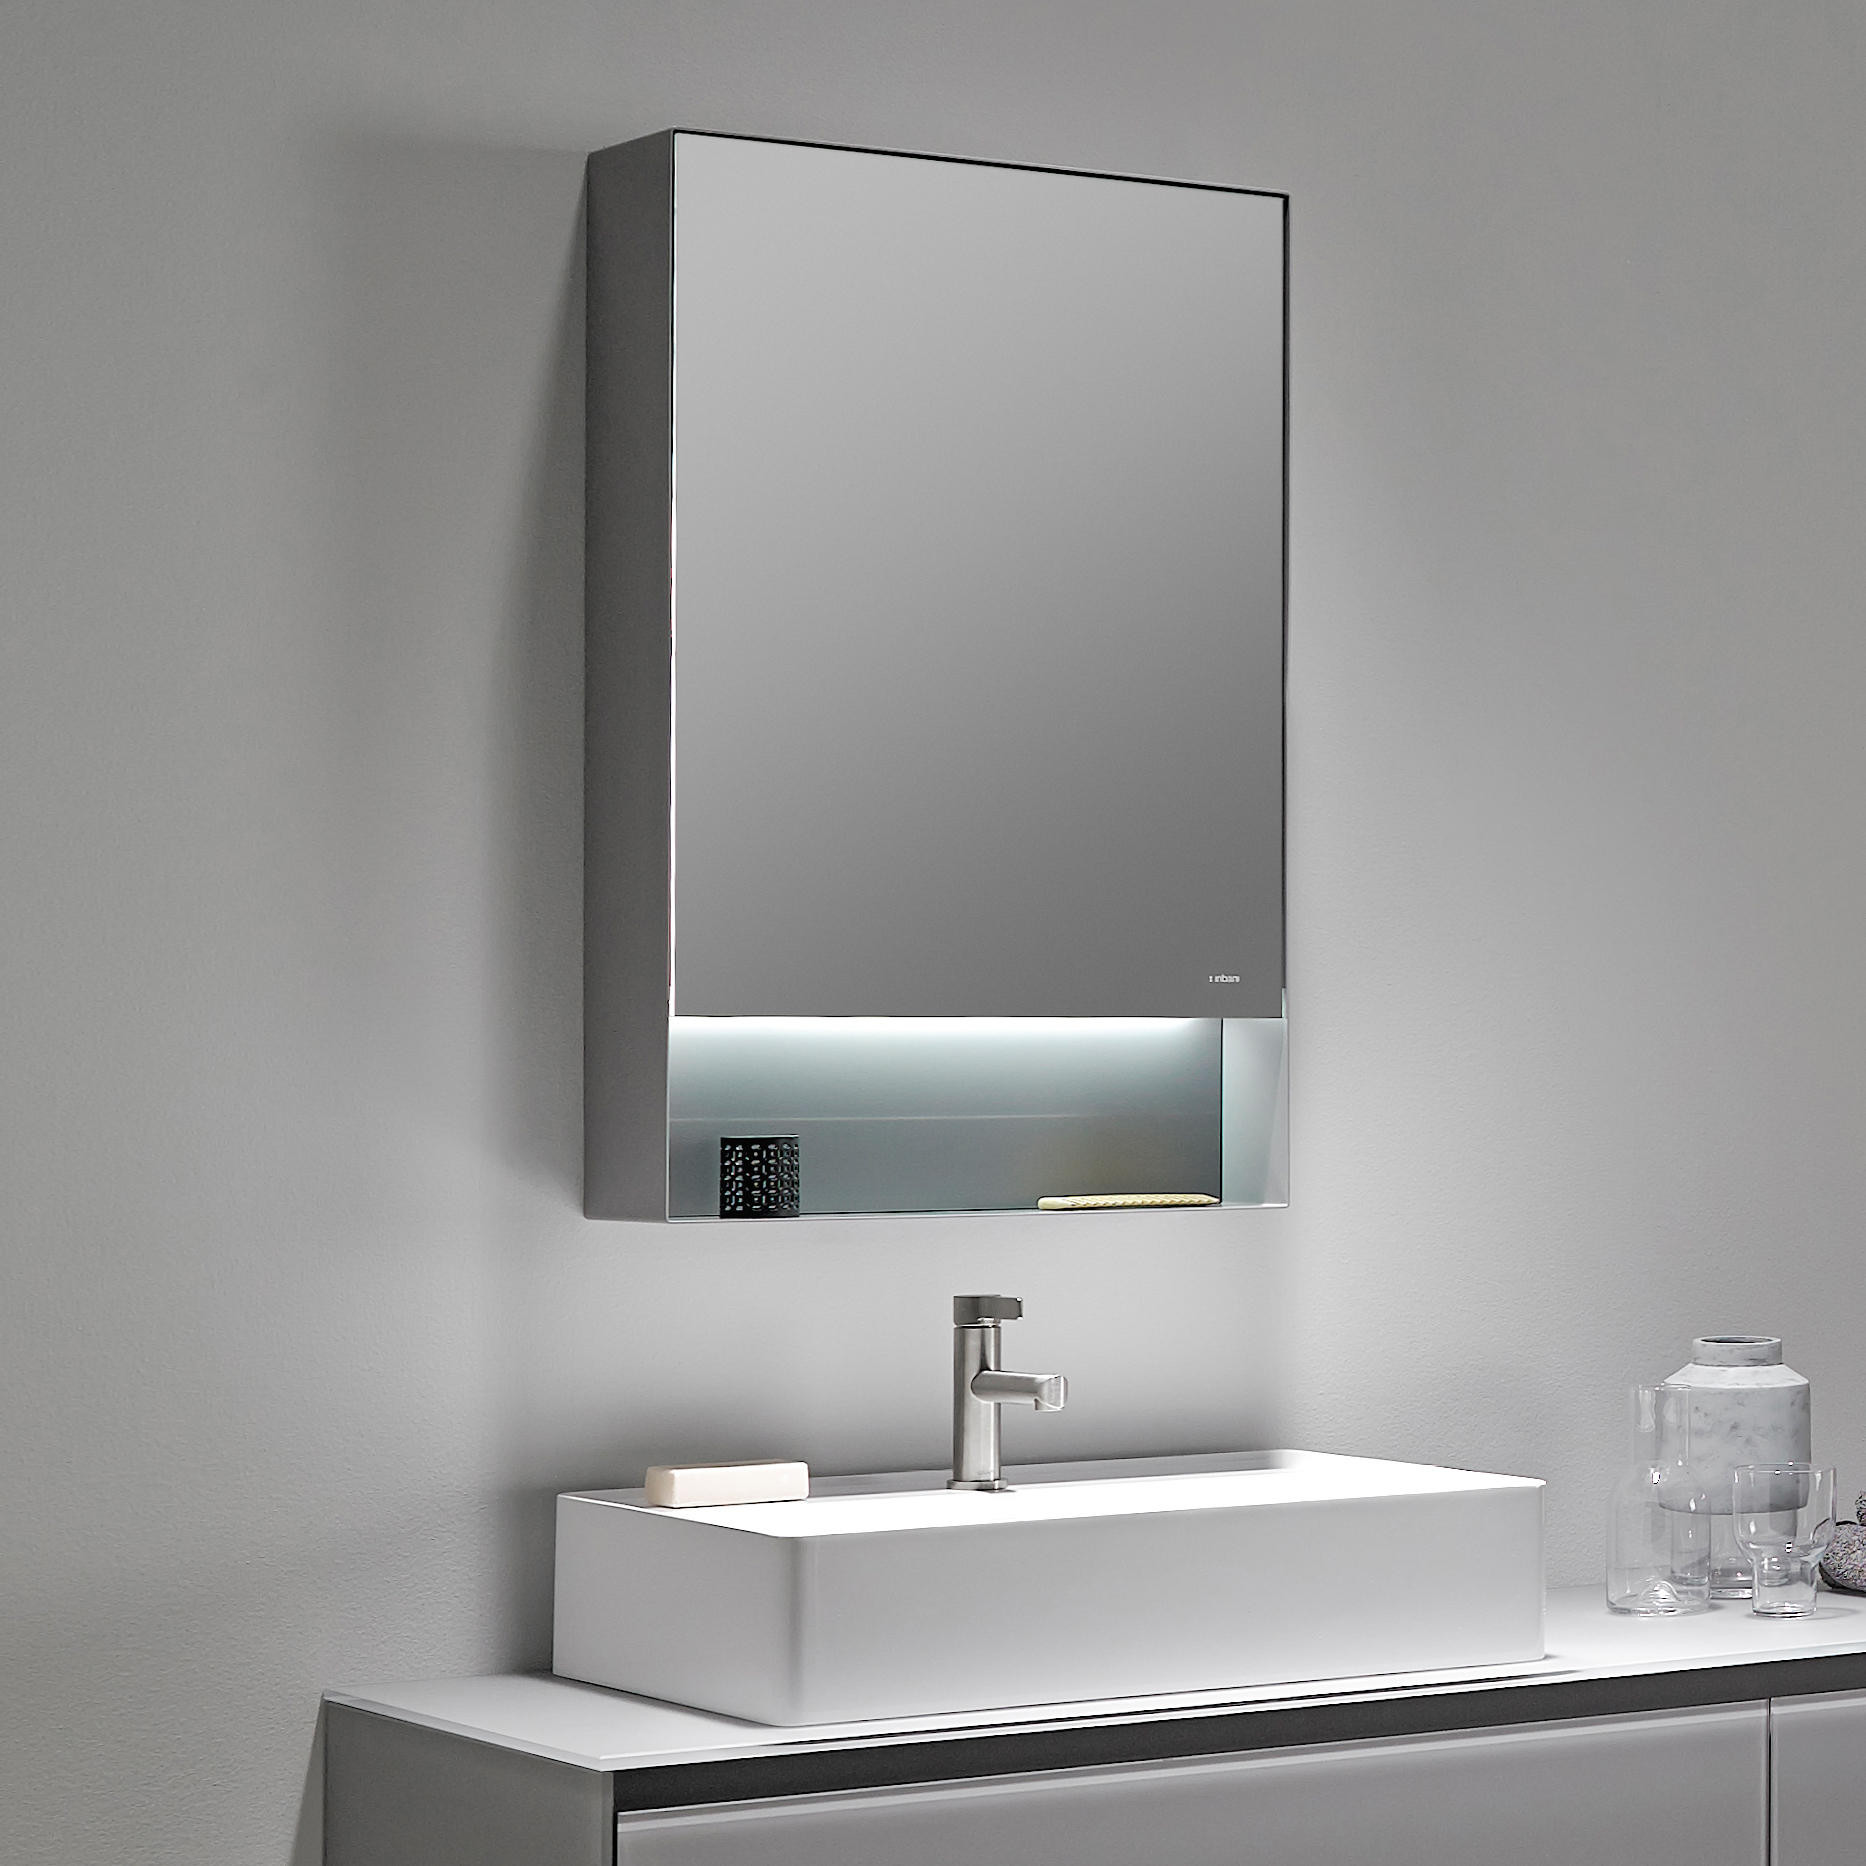 Bathroom Cabinet Mirrors
 STRATO METALLIC CABINET MIRROR Mirror cabinets from